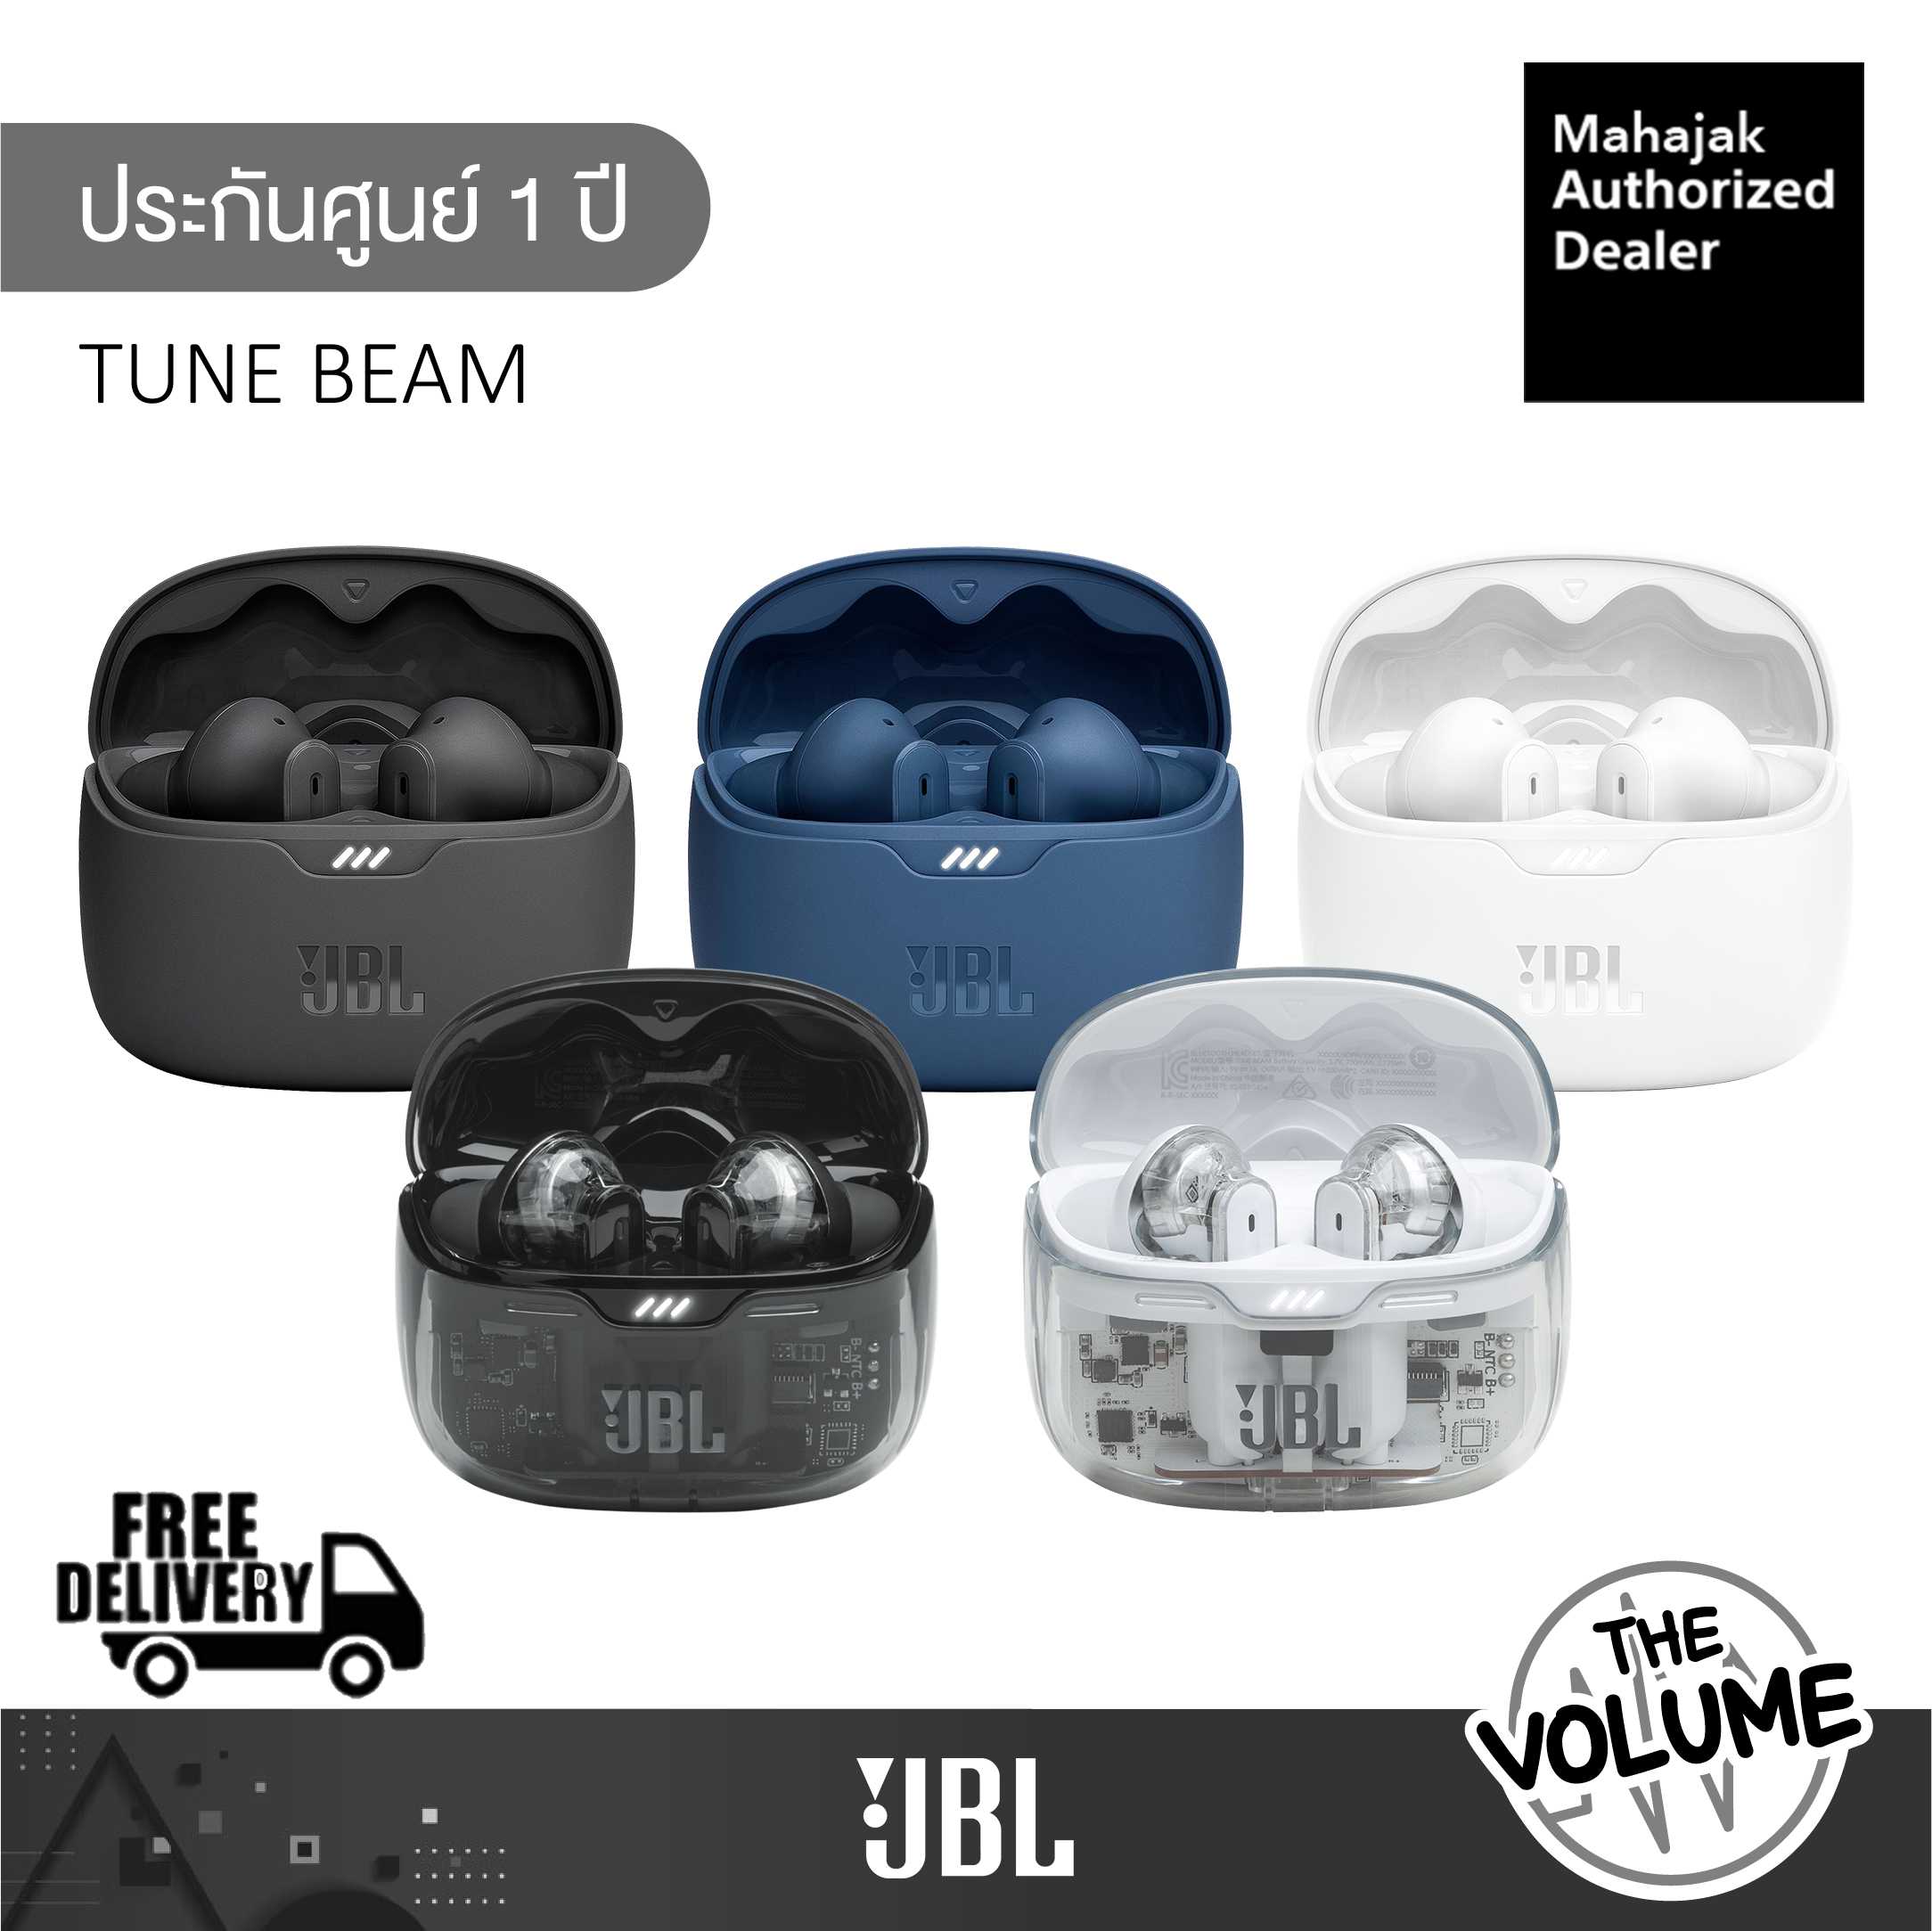 JBL Tune Beam wireless earbuds